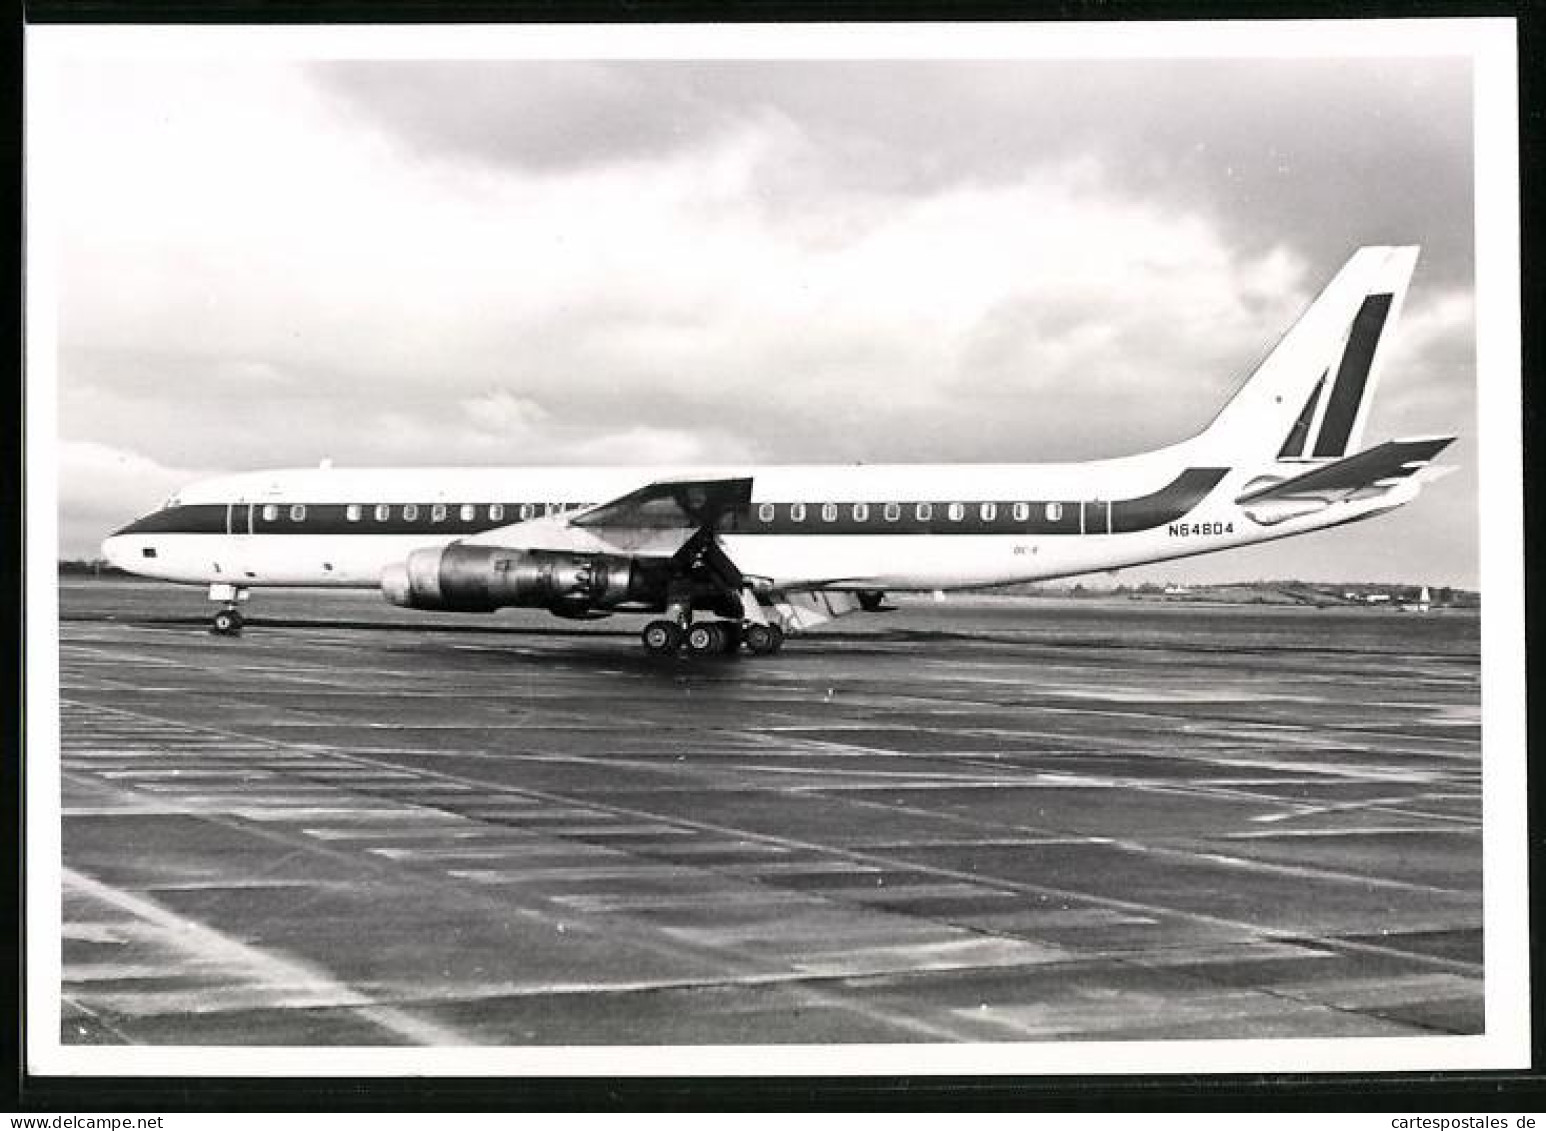 Fotografie Flugzeug - Passagierflugzeug Douglas DC-8, Kennung: N64804  - Luftfahrt